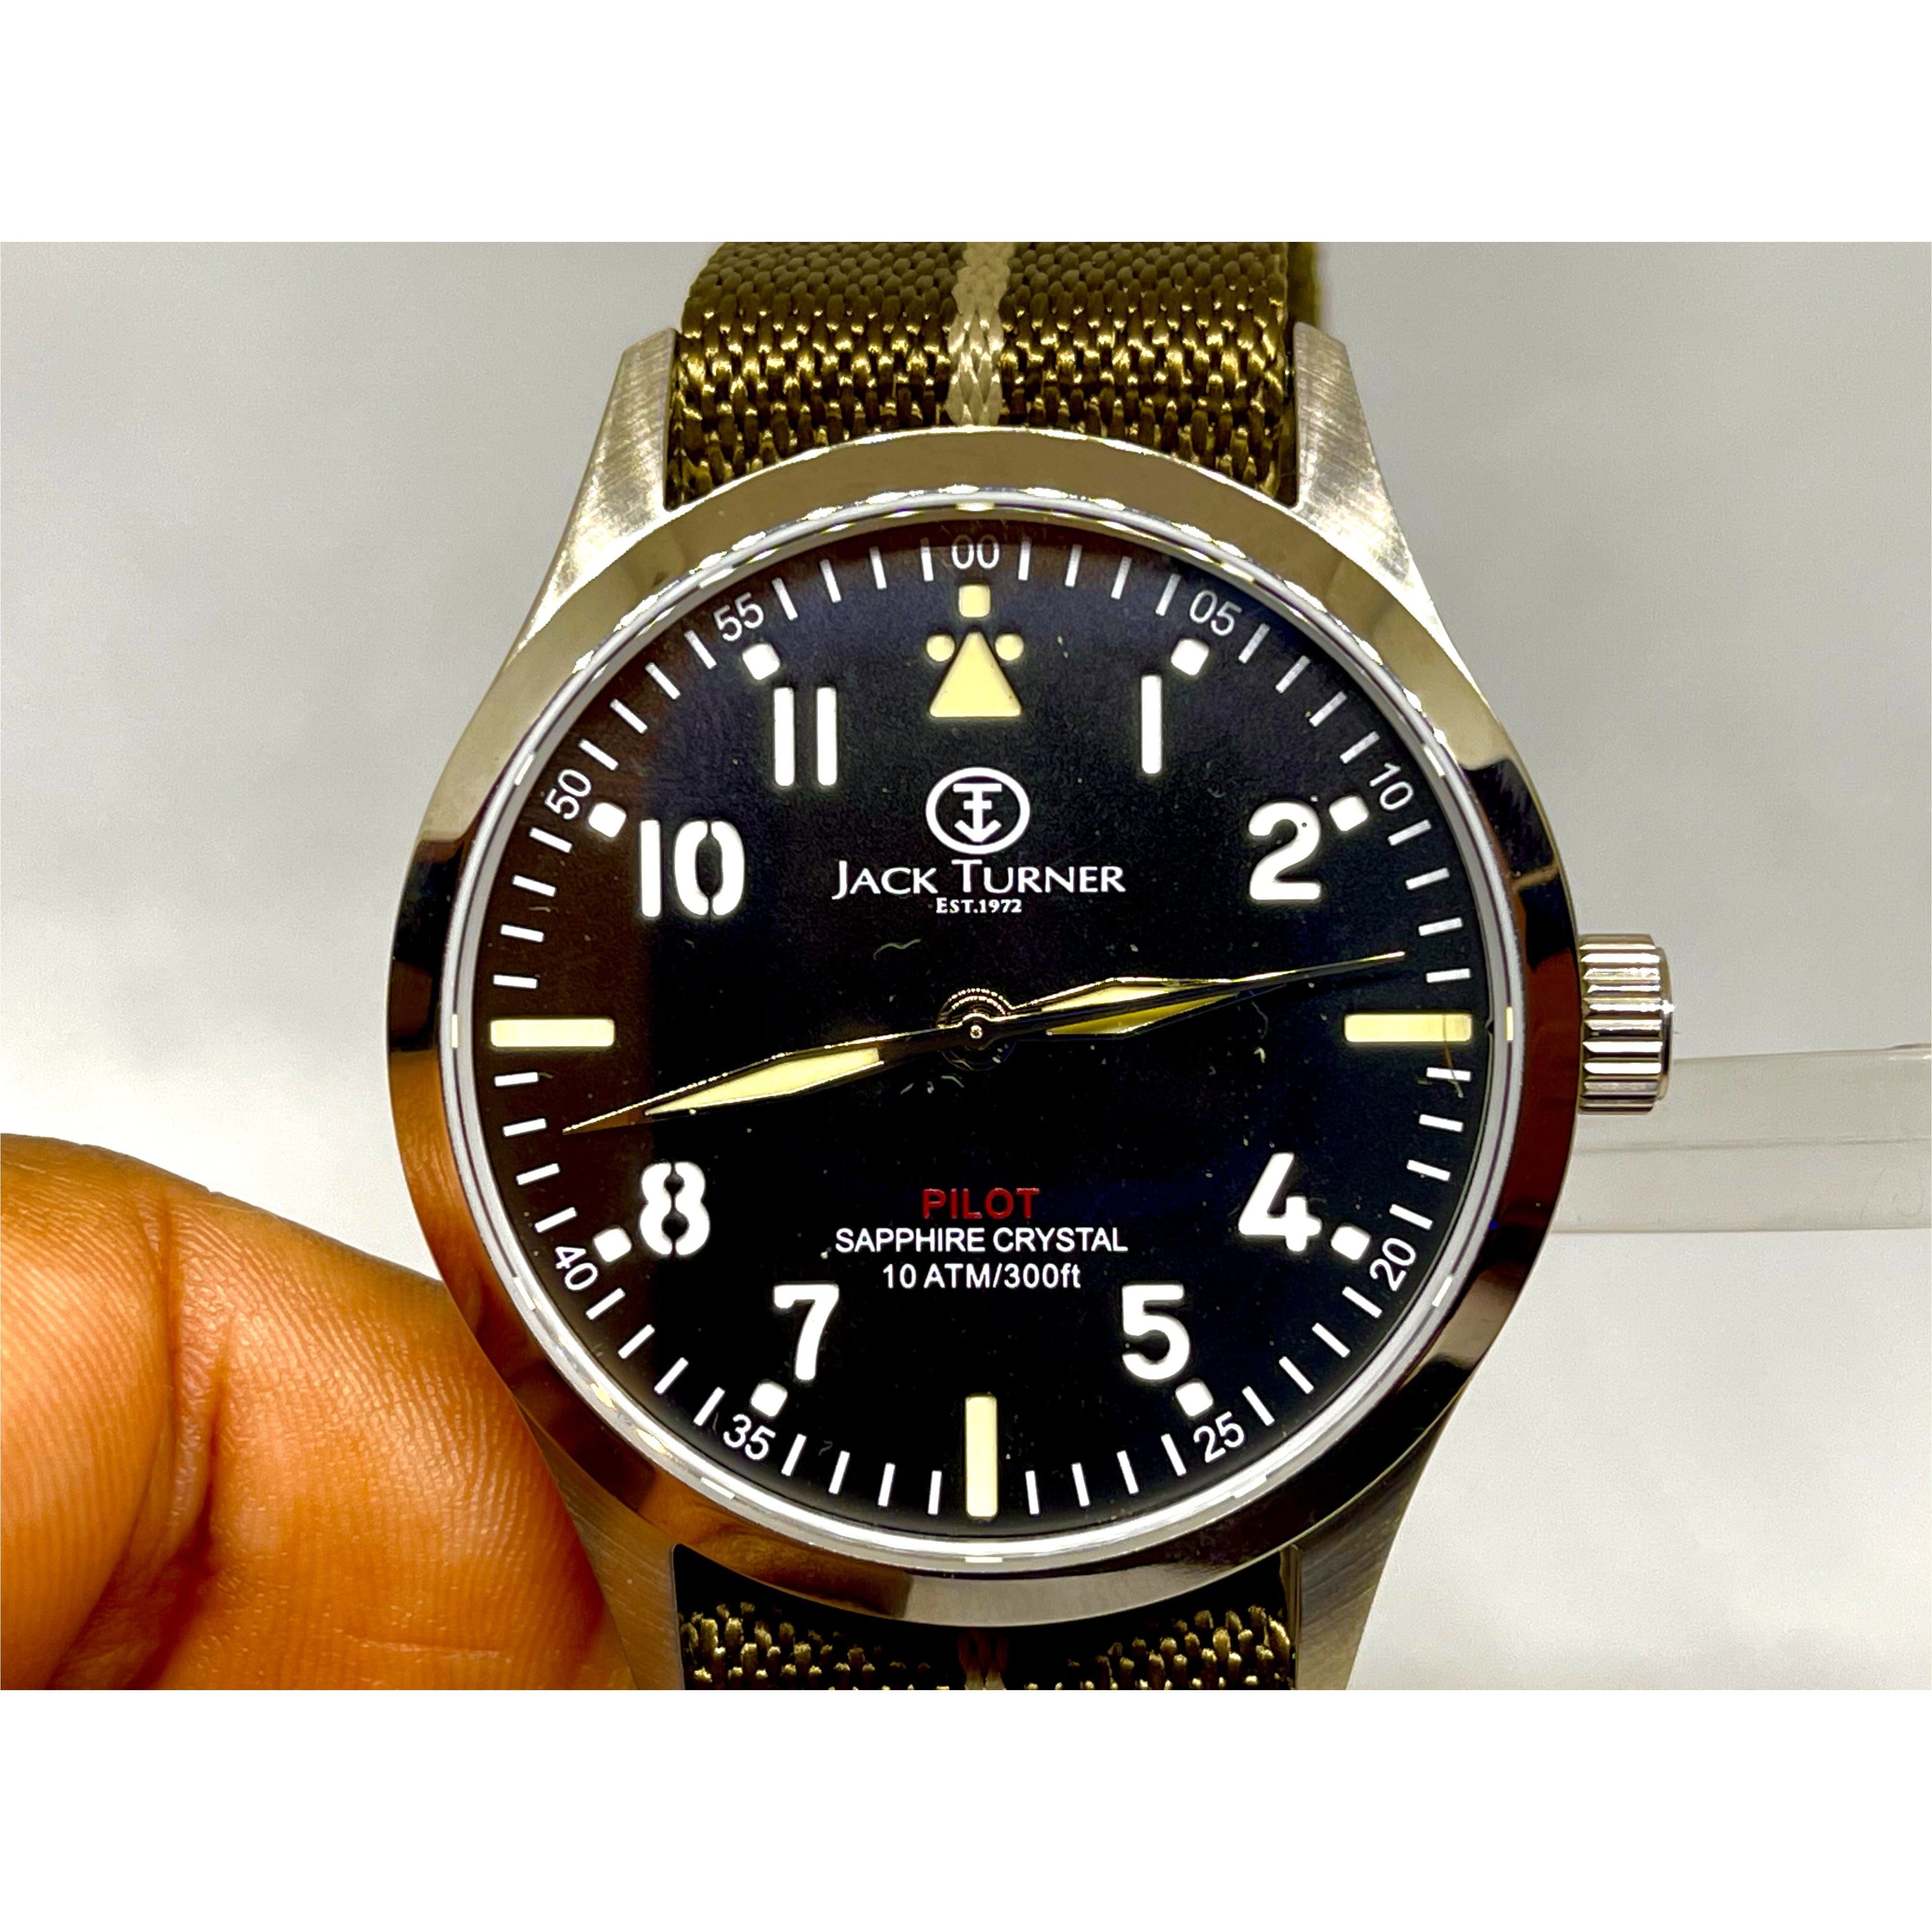 Black “THE TRAVELER” Stainless Steel Pilot / Field Watch with Mechanical Quartz Movement for Men